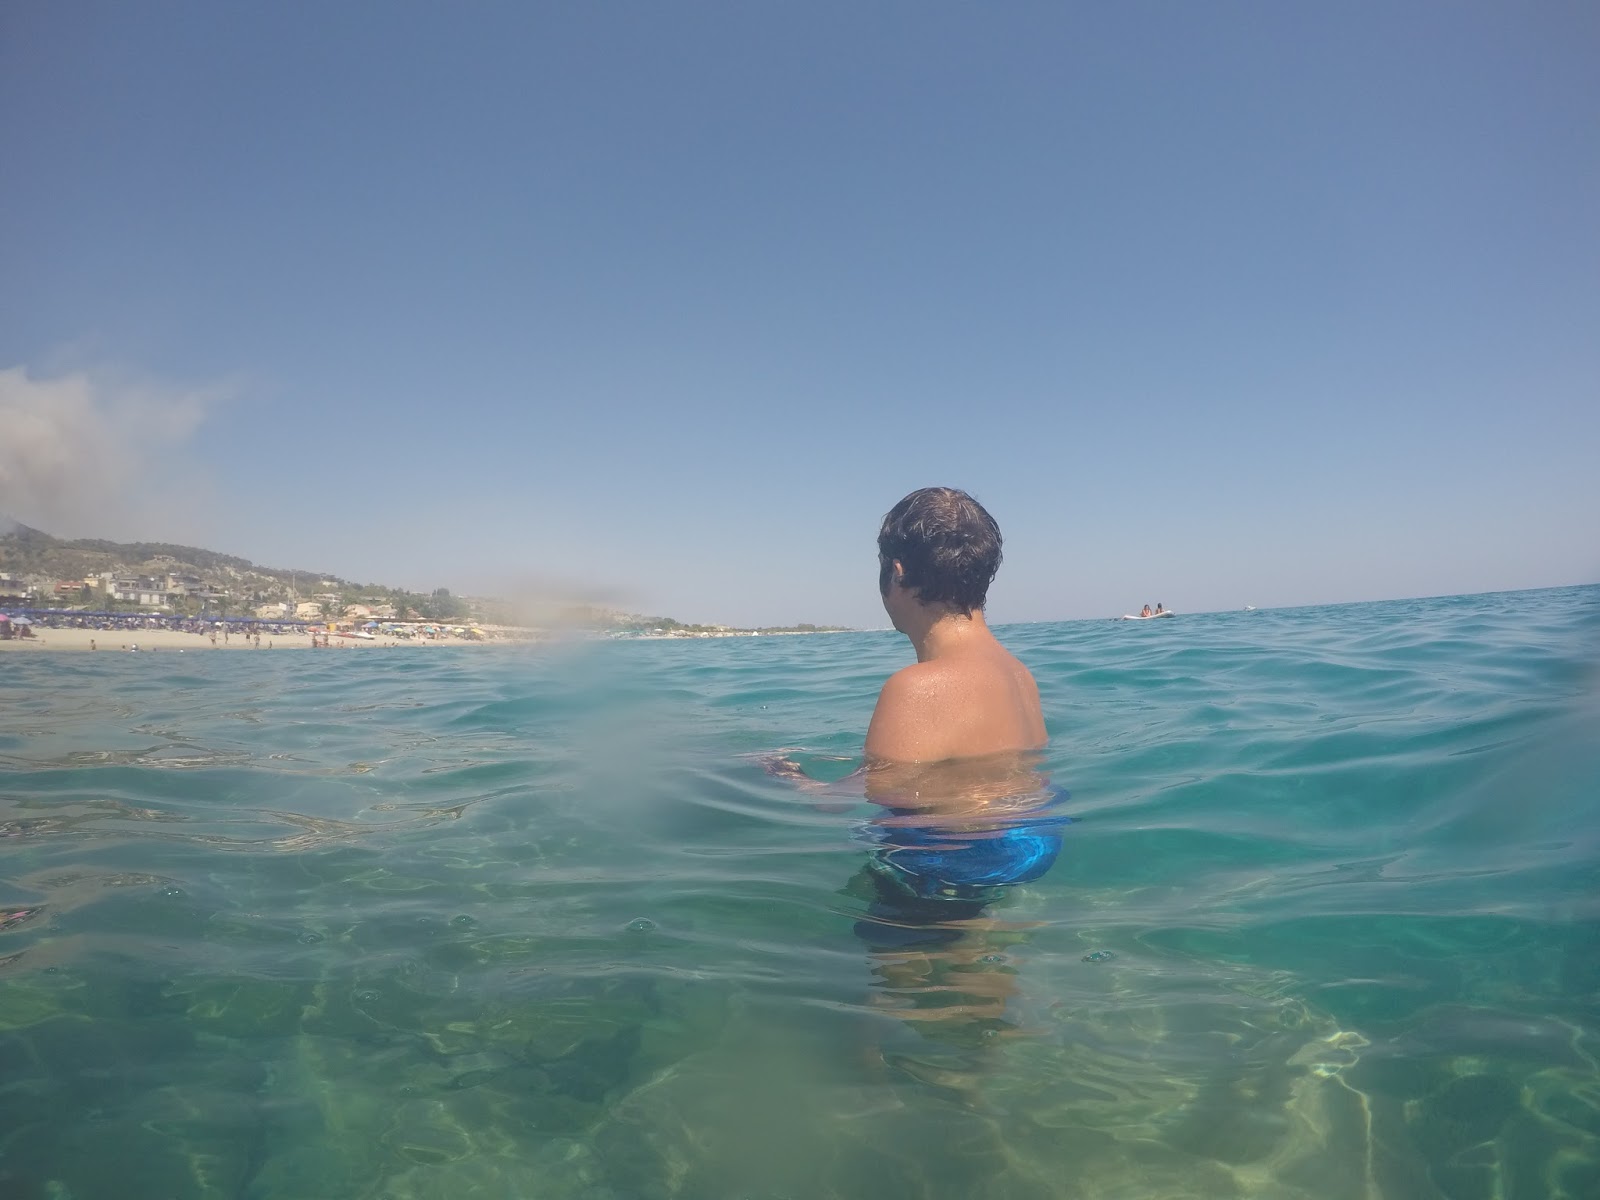 Italy, GoPro Hero 4, Under the water photos